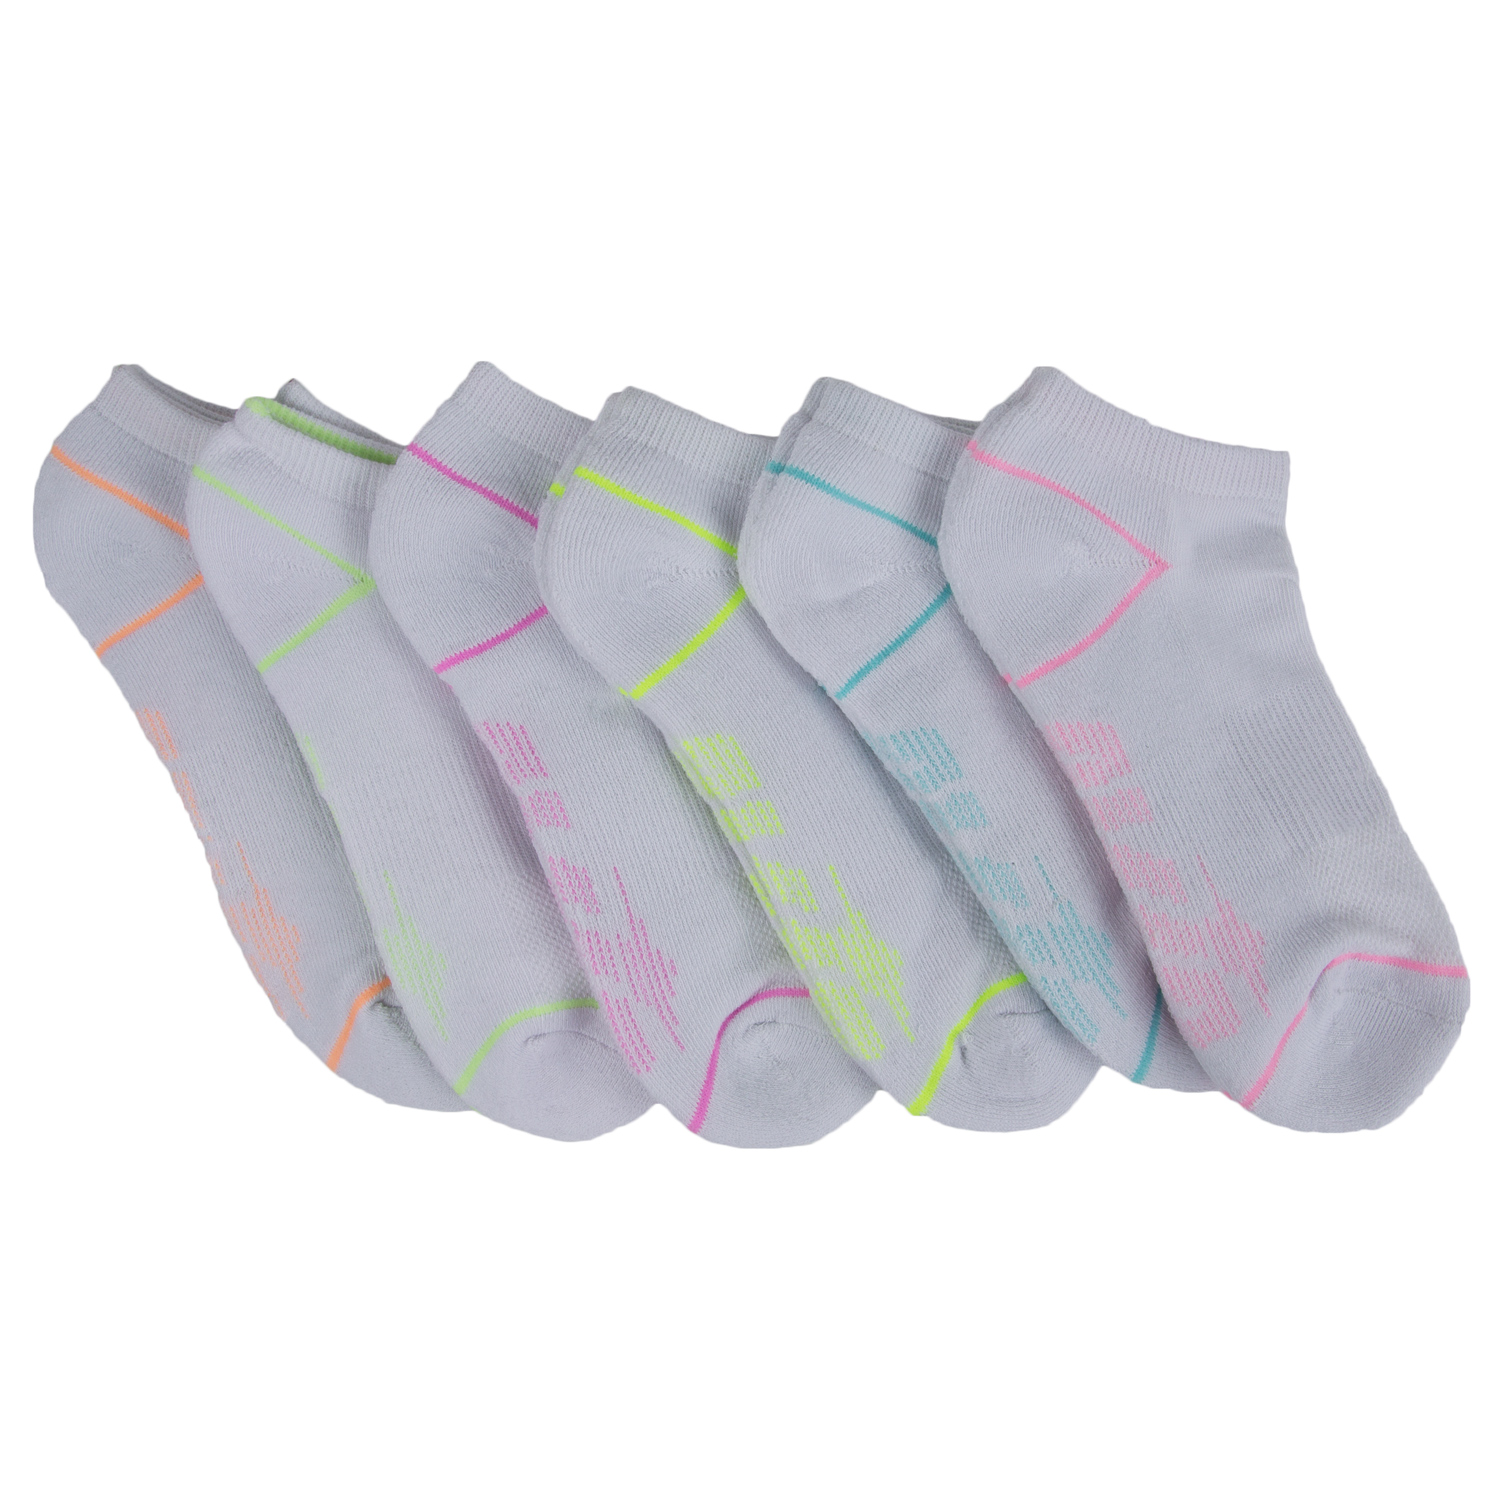 AVIA Women's White/Pink 6 Pair Pro-Tech Low Cut Socks Sz 4-10 NEW | eBay